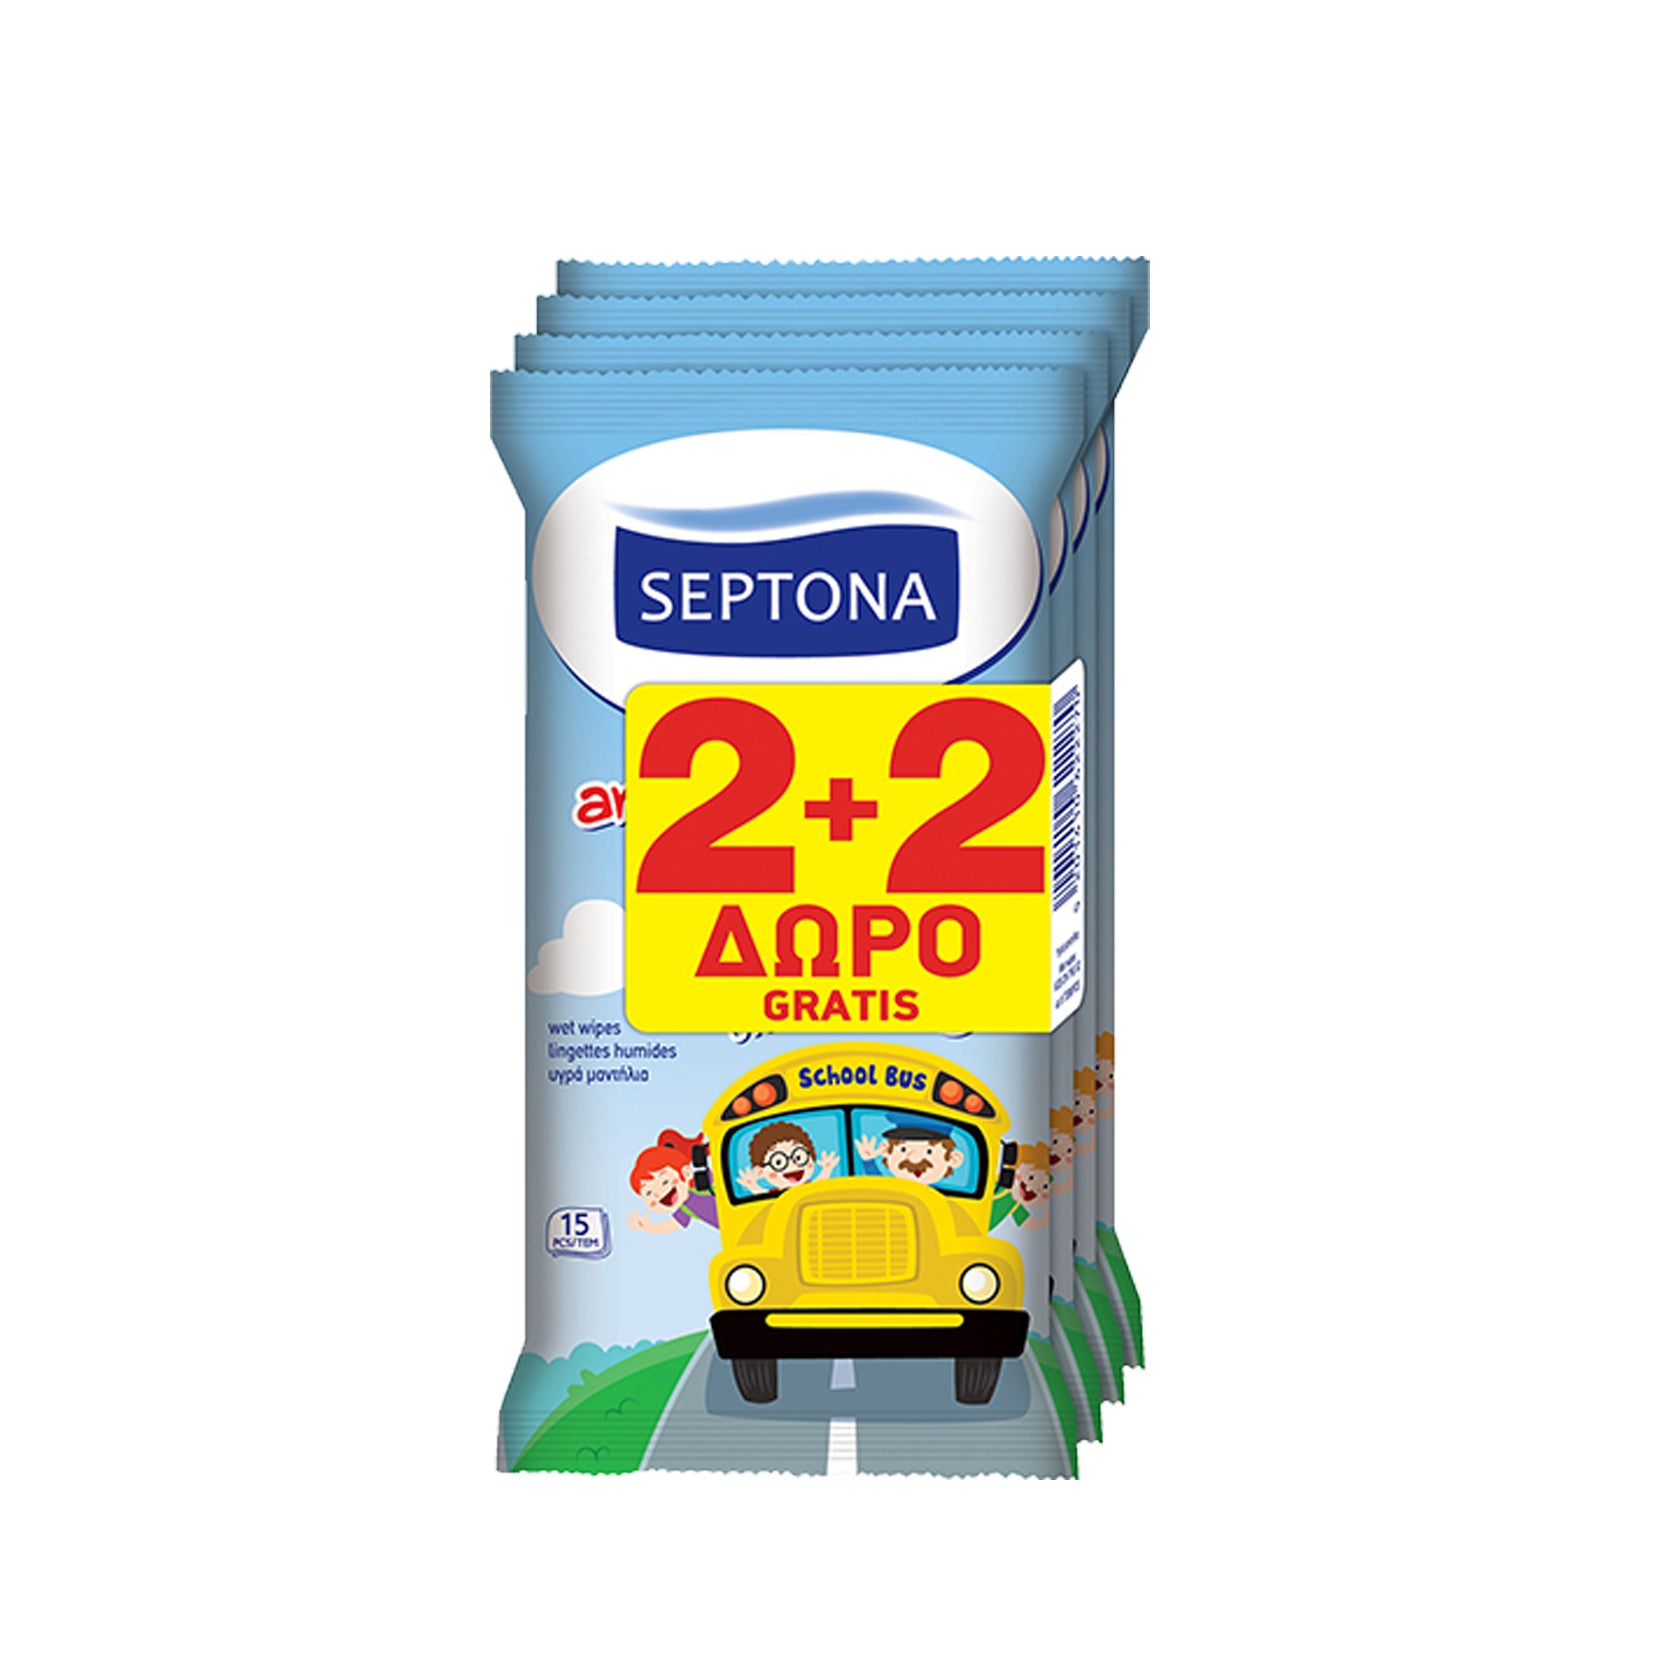 Septona Kids on the go Antibacterial Wipes 15 pcs 2+2